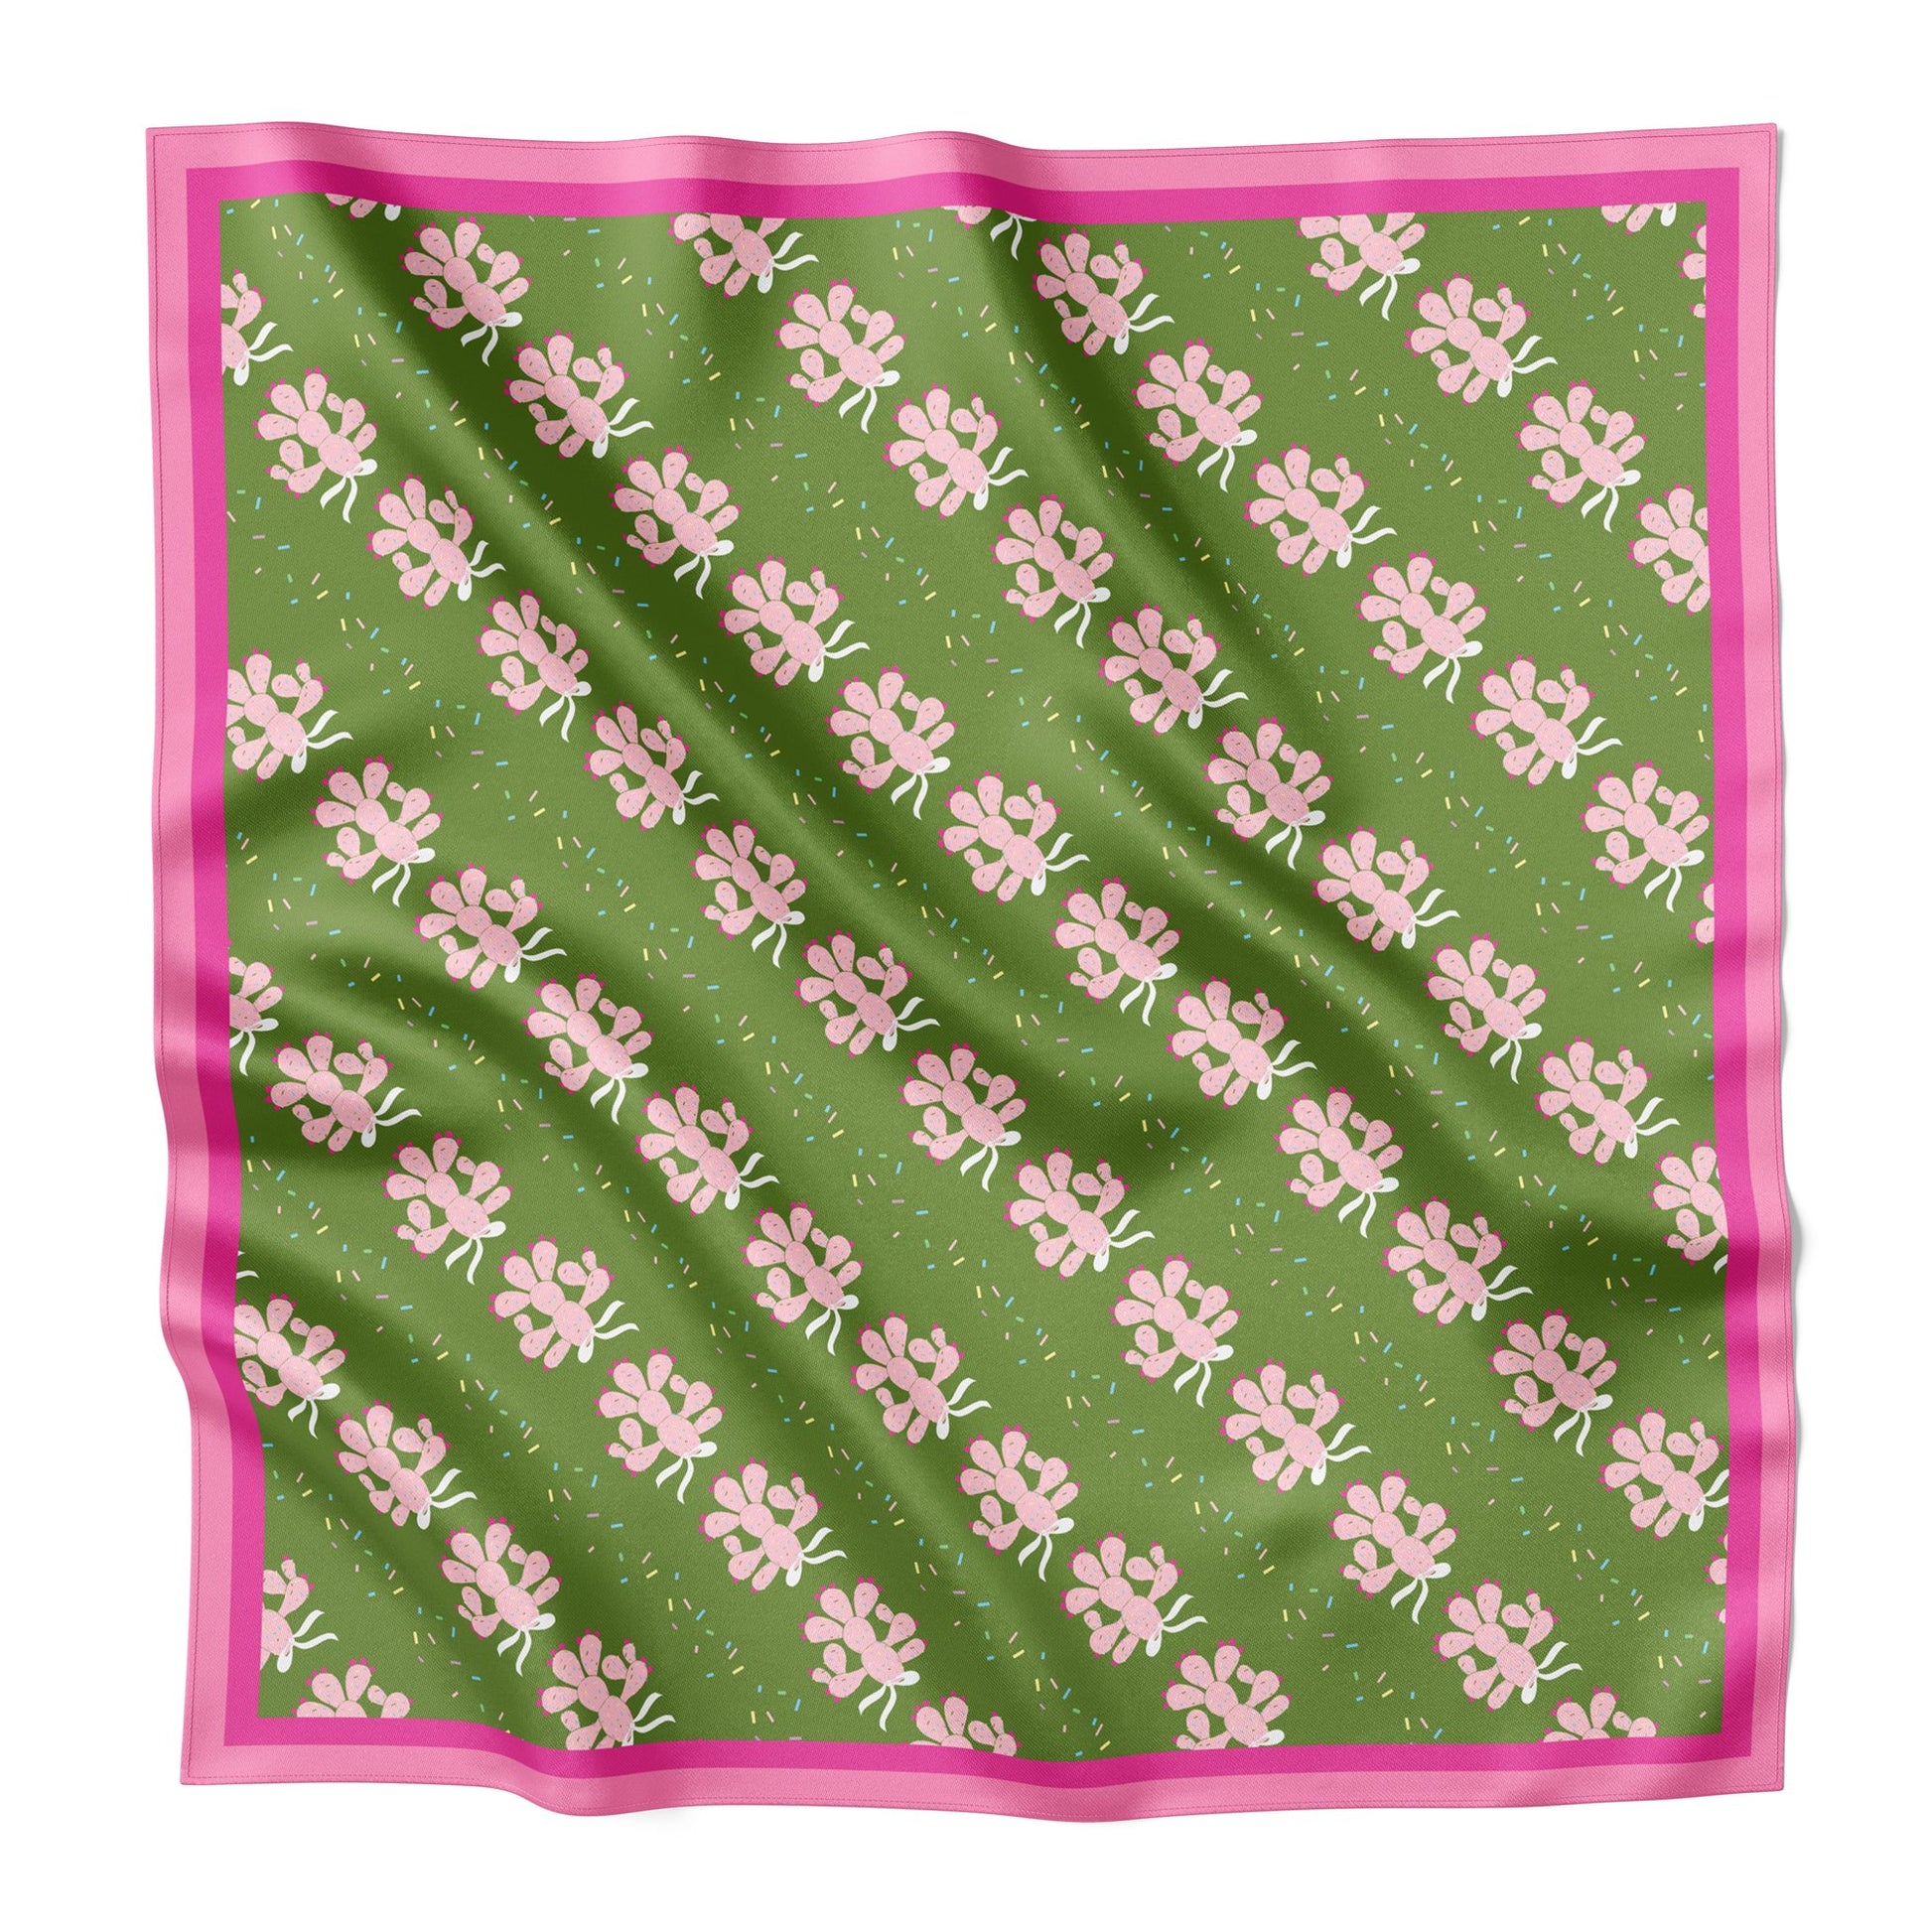 Green silk bandana with pink cacti.